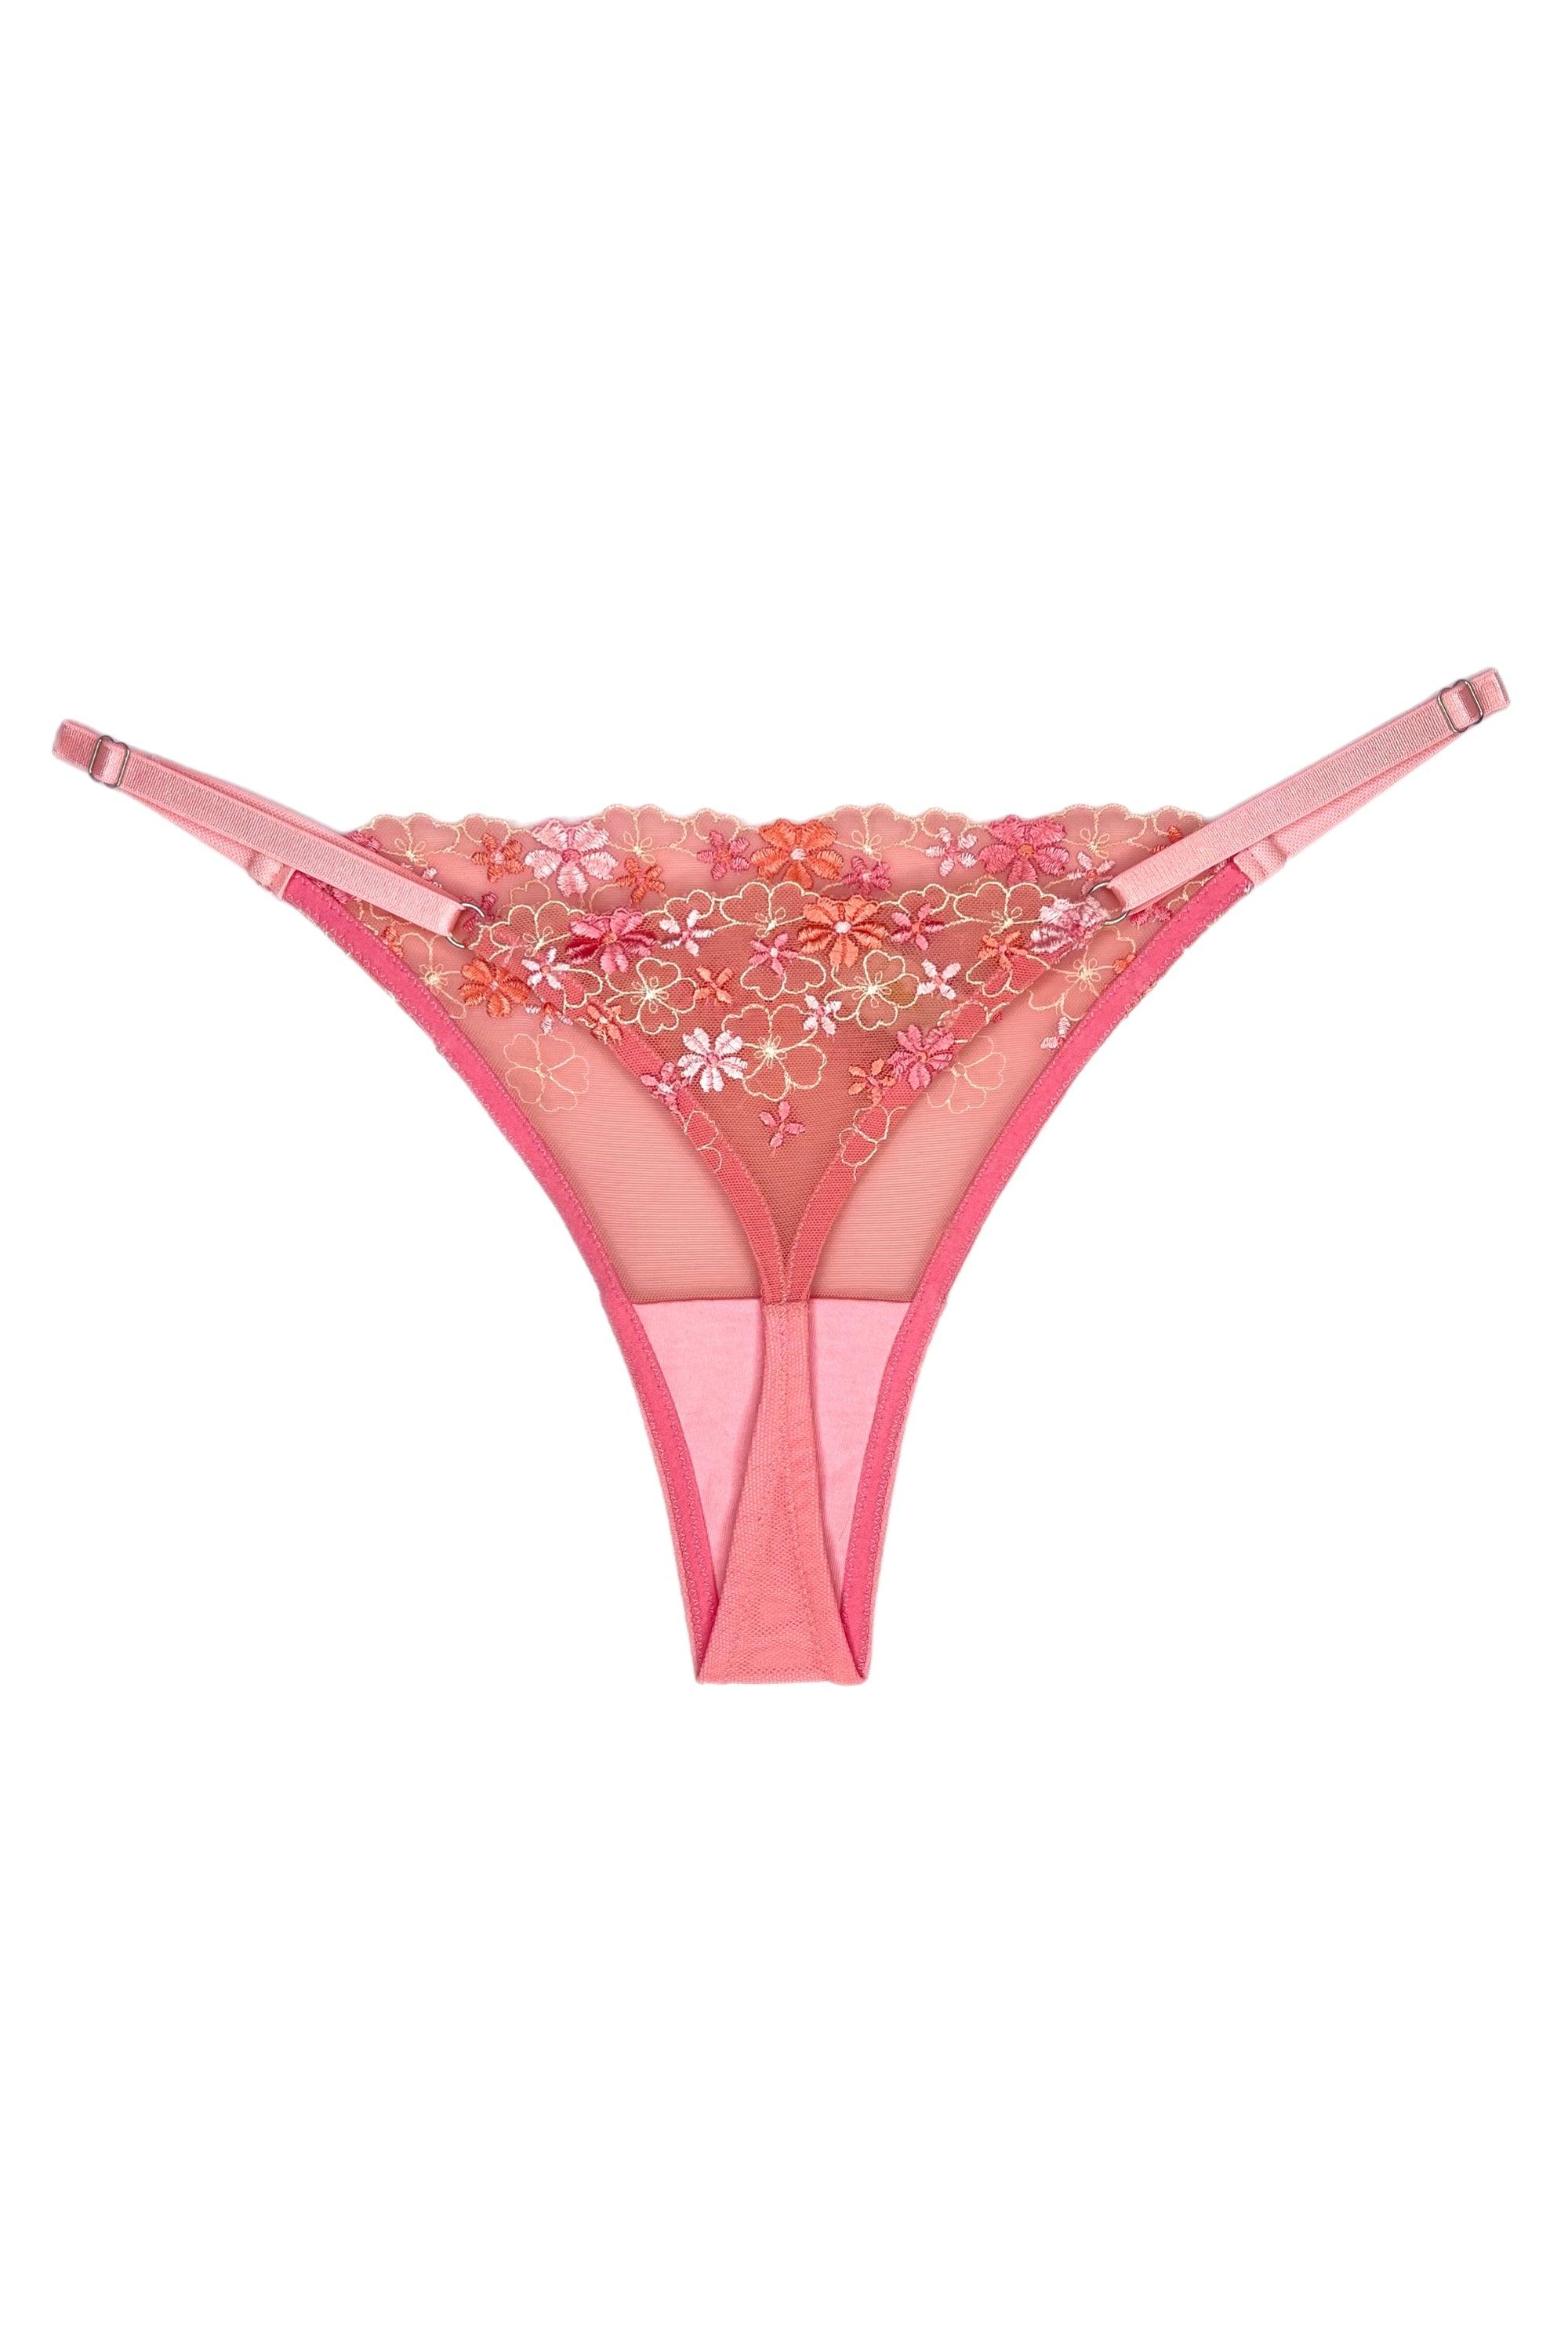 Cardamine Pink thongs - yesUndress